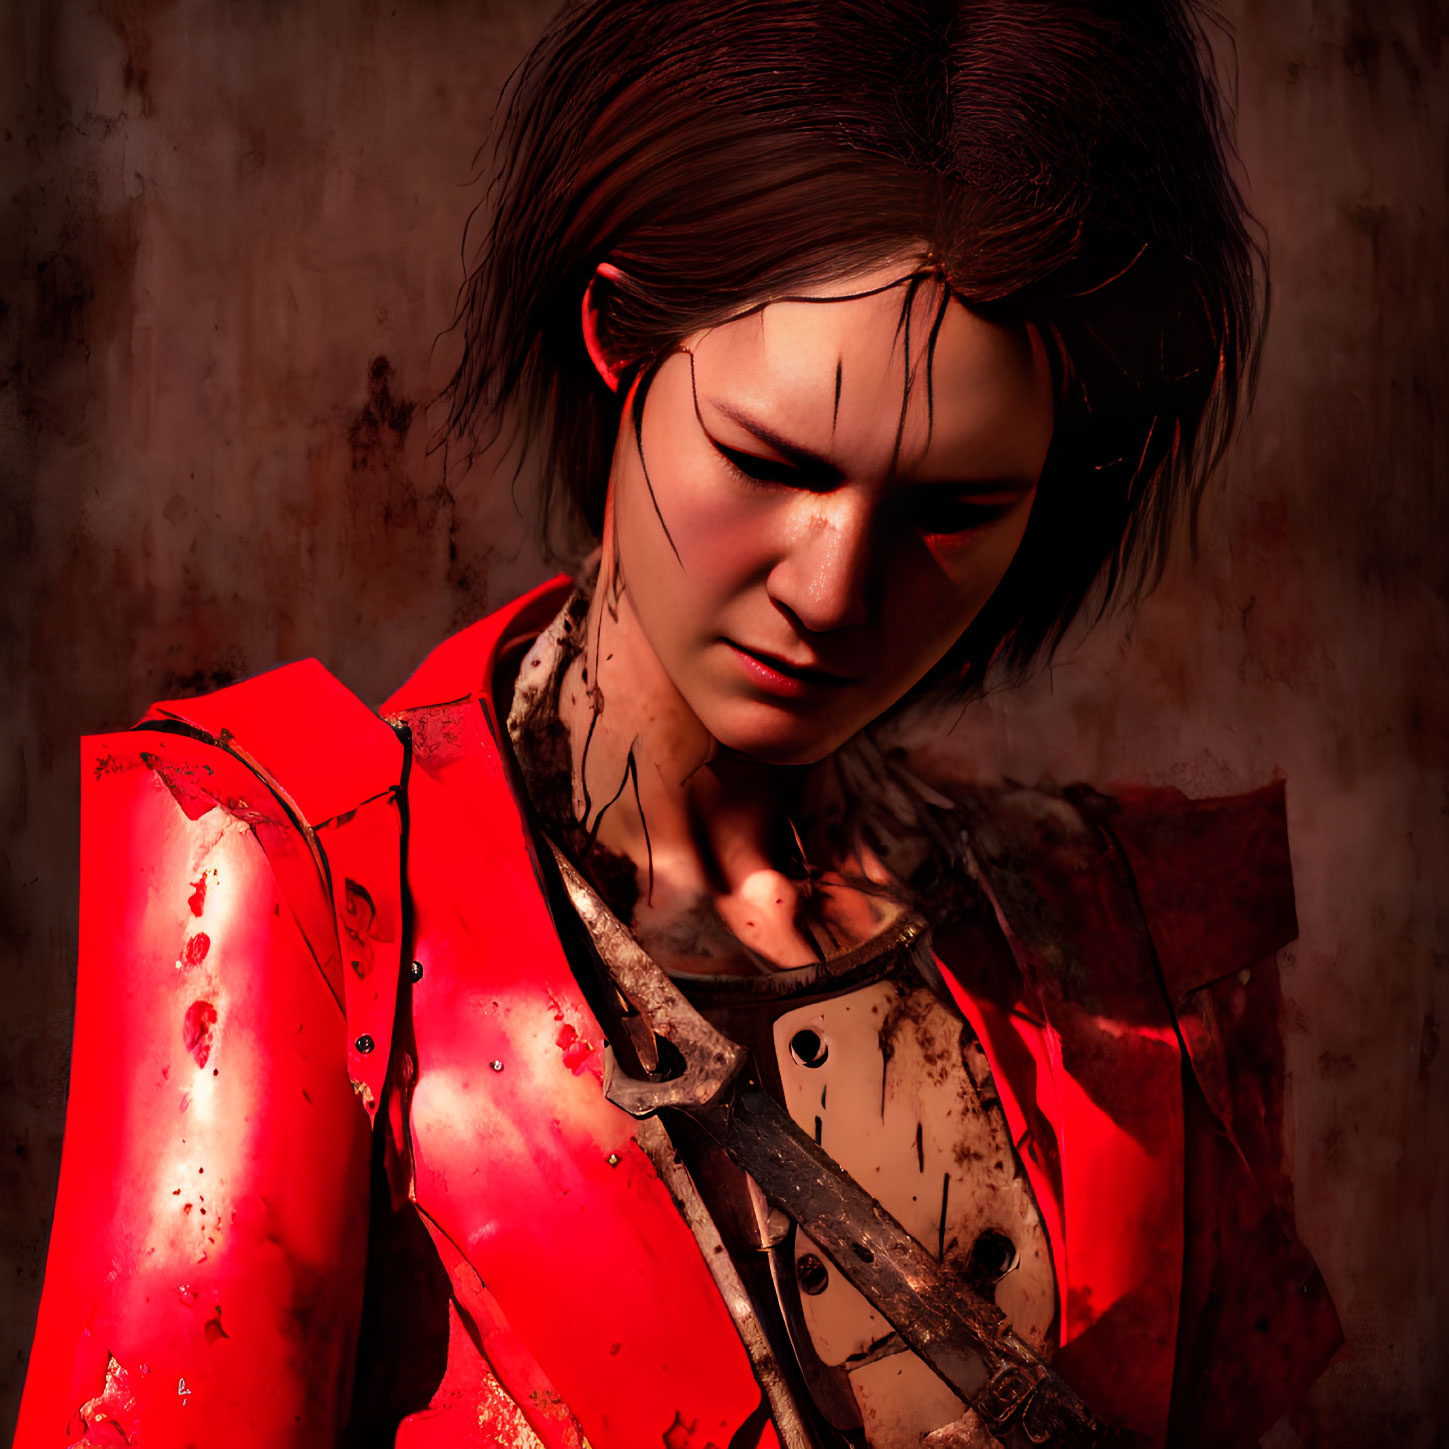 Digital artwork: Woman grimacing, covered in blood, in tattered red jacket